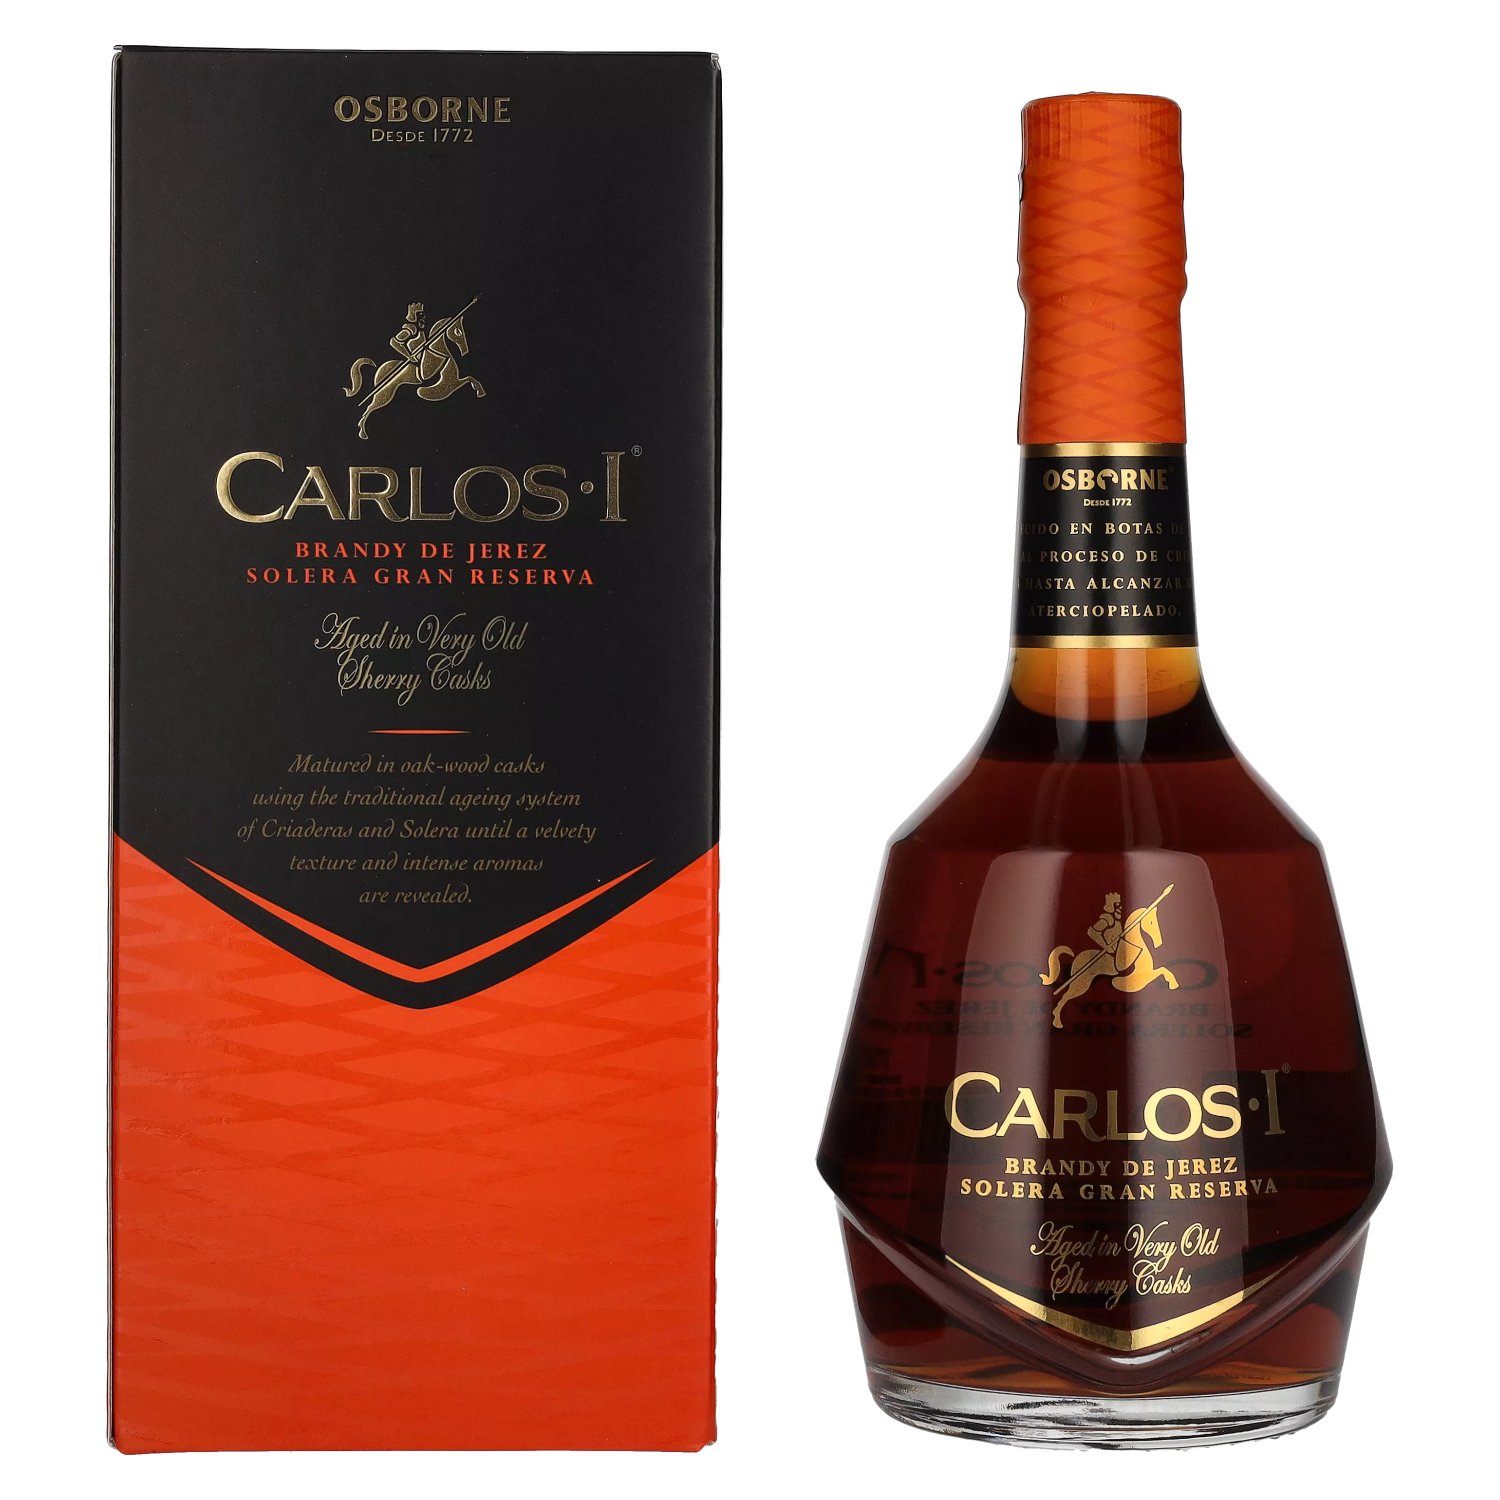 Carlos I Brandy de Jerez Solera Gran Reserva Sherry Casks 40% Vol. 0,7l in  Giftbox